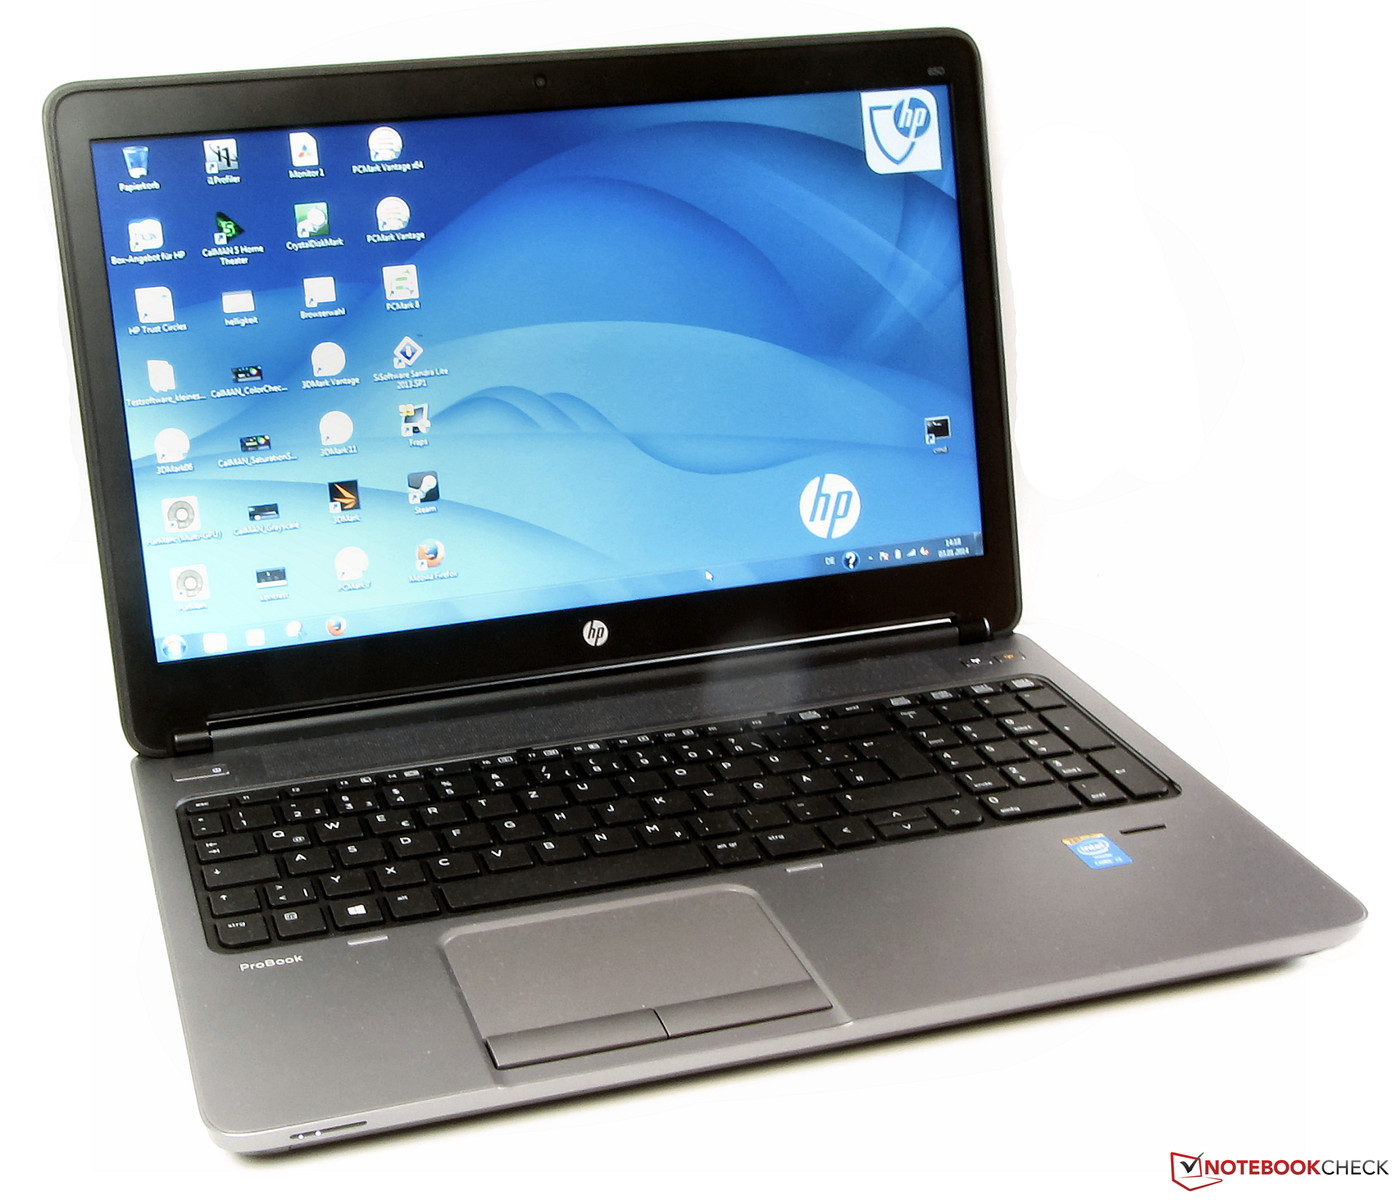 Hp Probook 650 G1 I5 Best Sale, 57% OFF | www.ingeniovirtual.com